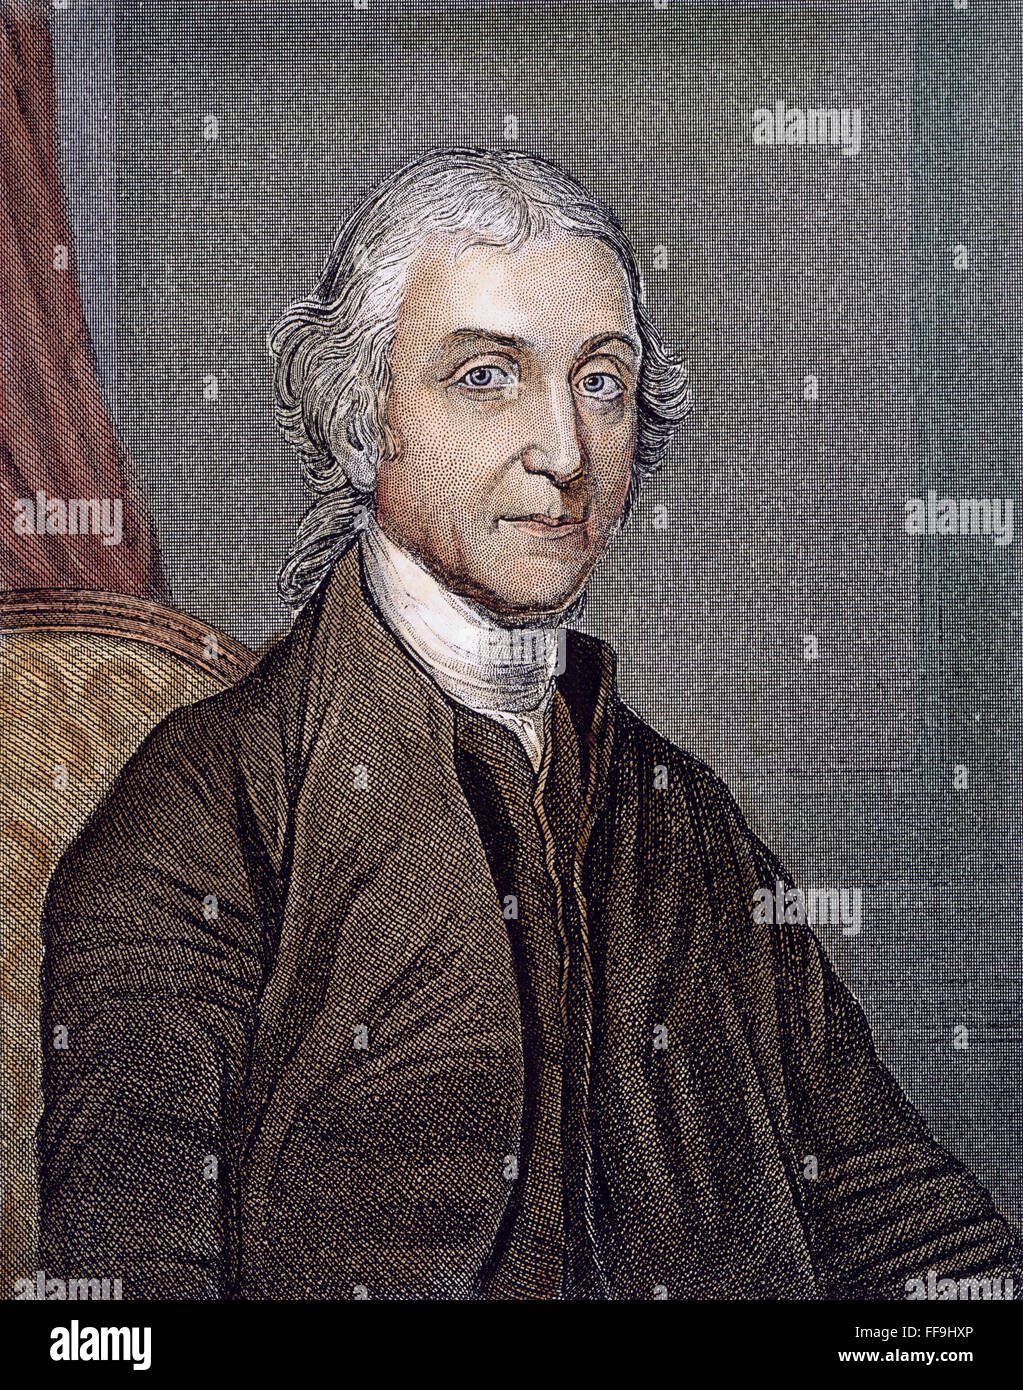 JOSEPH PRIESTLEY (1733-1804). /nEnglish clergyman and chemist. Steel engraving, English, 19th century. Stock Photo